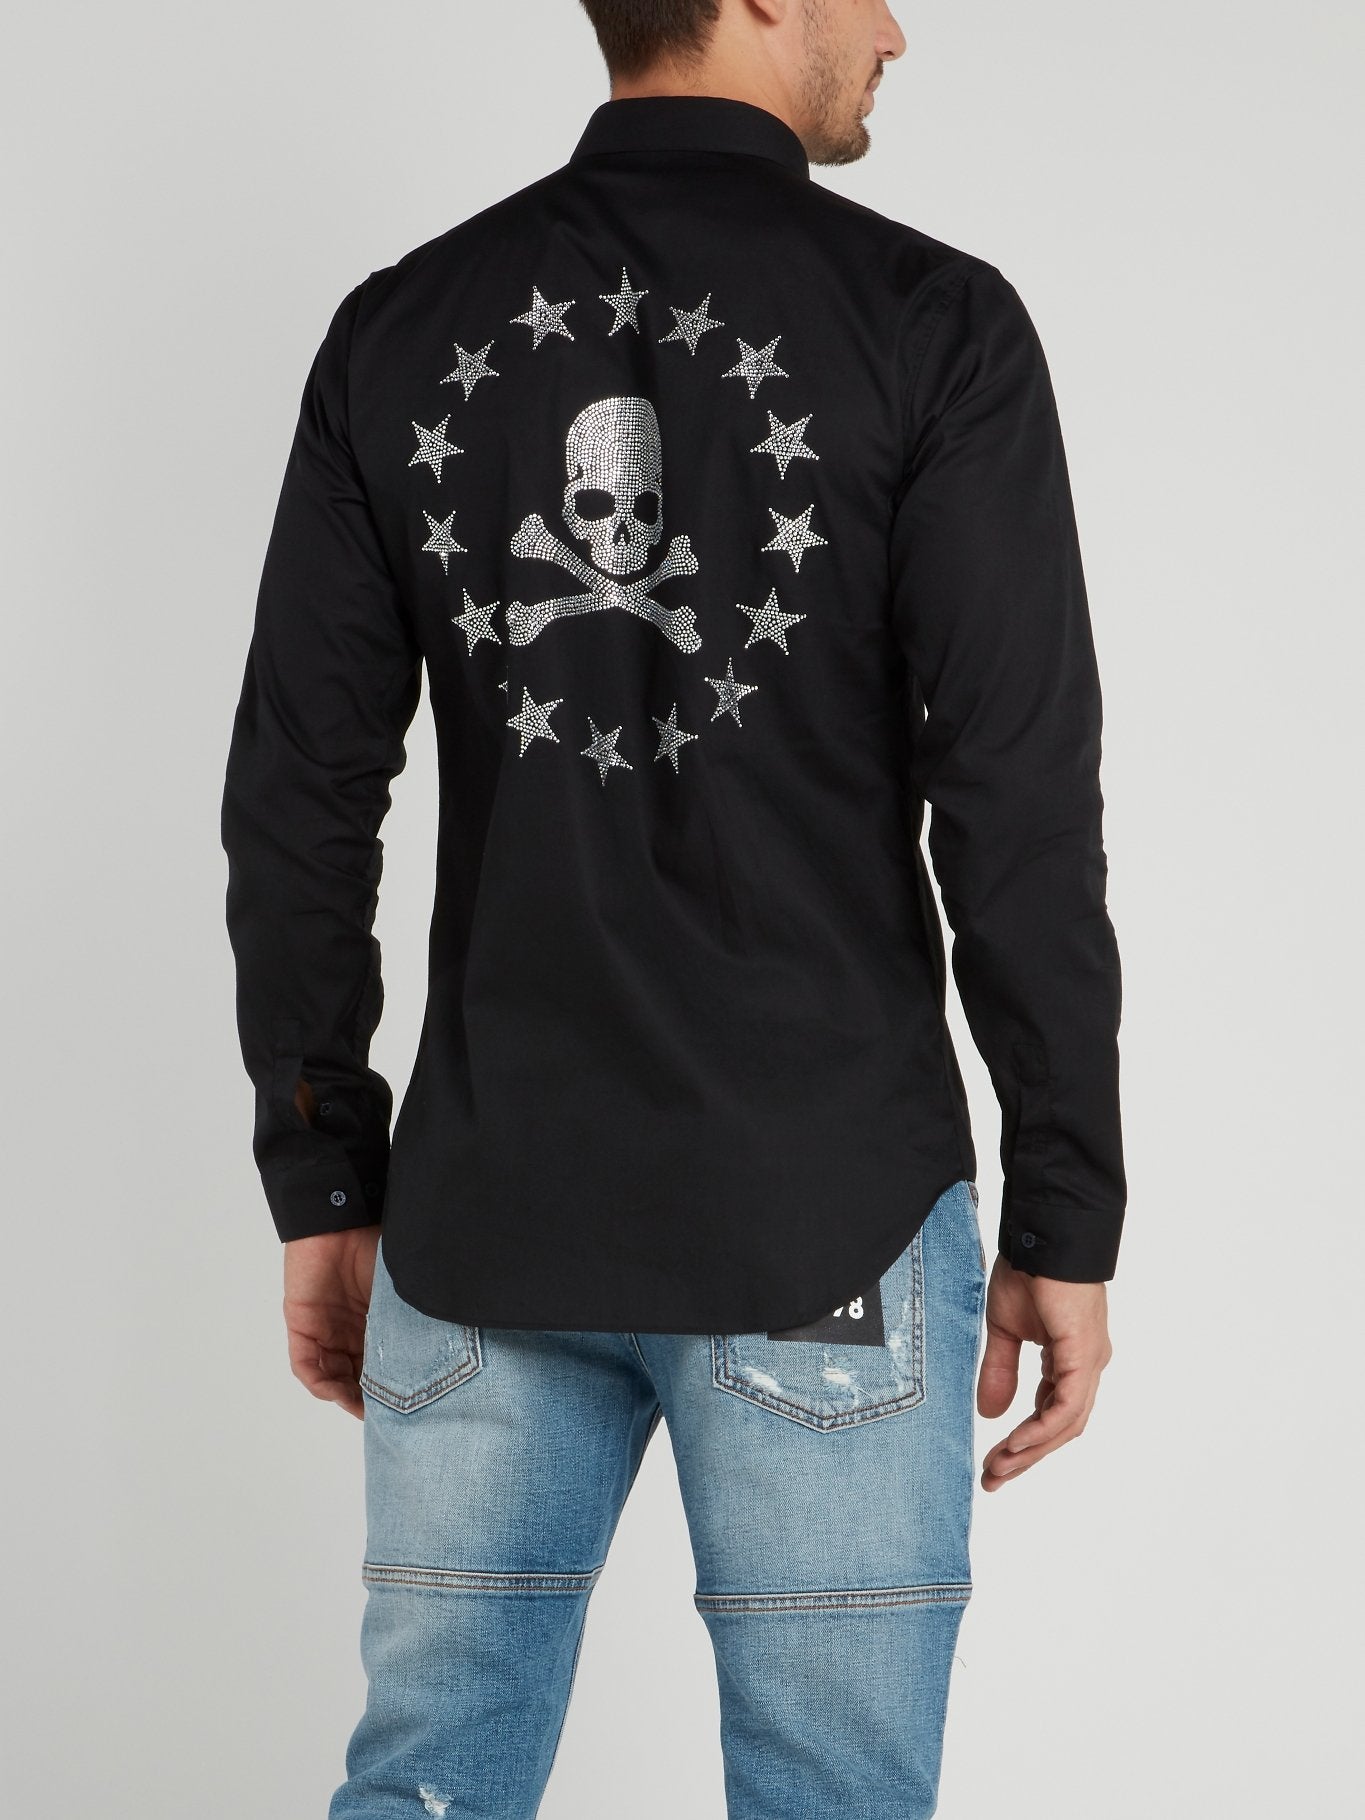 Black Crystal Studded Skull Shirt